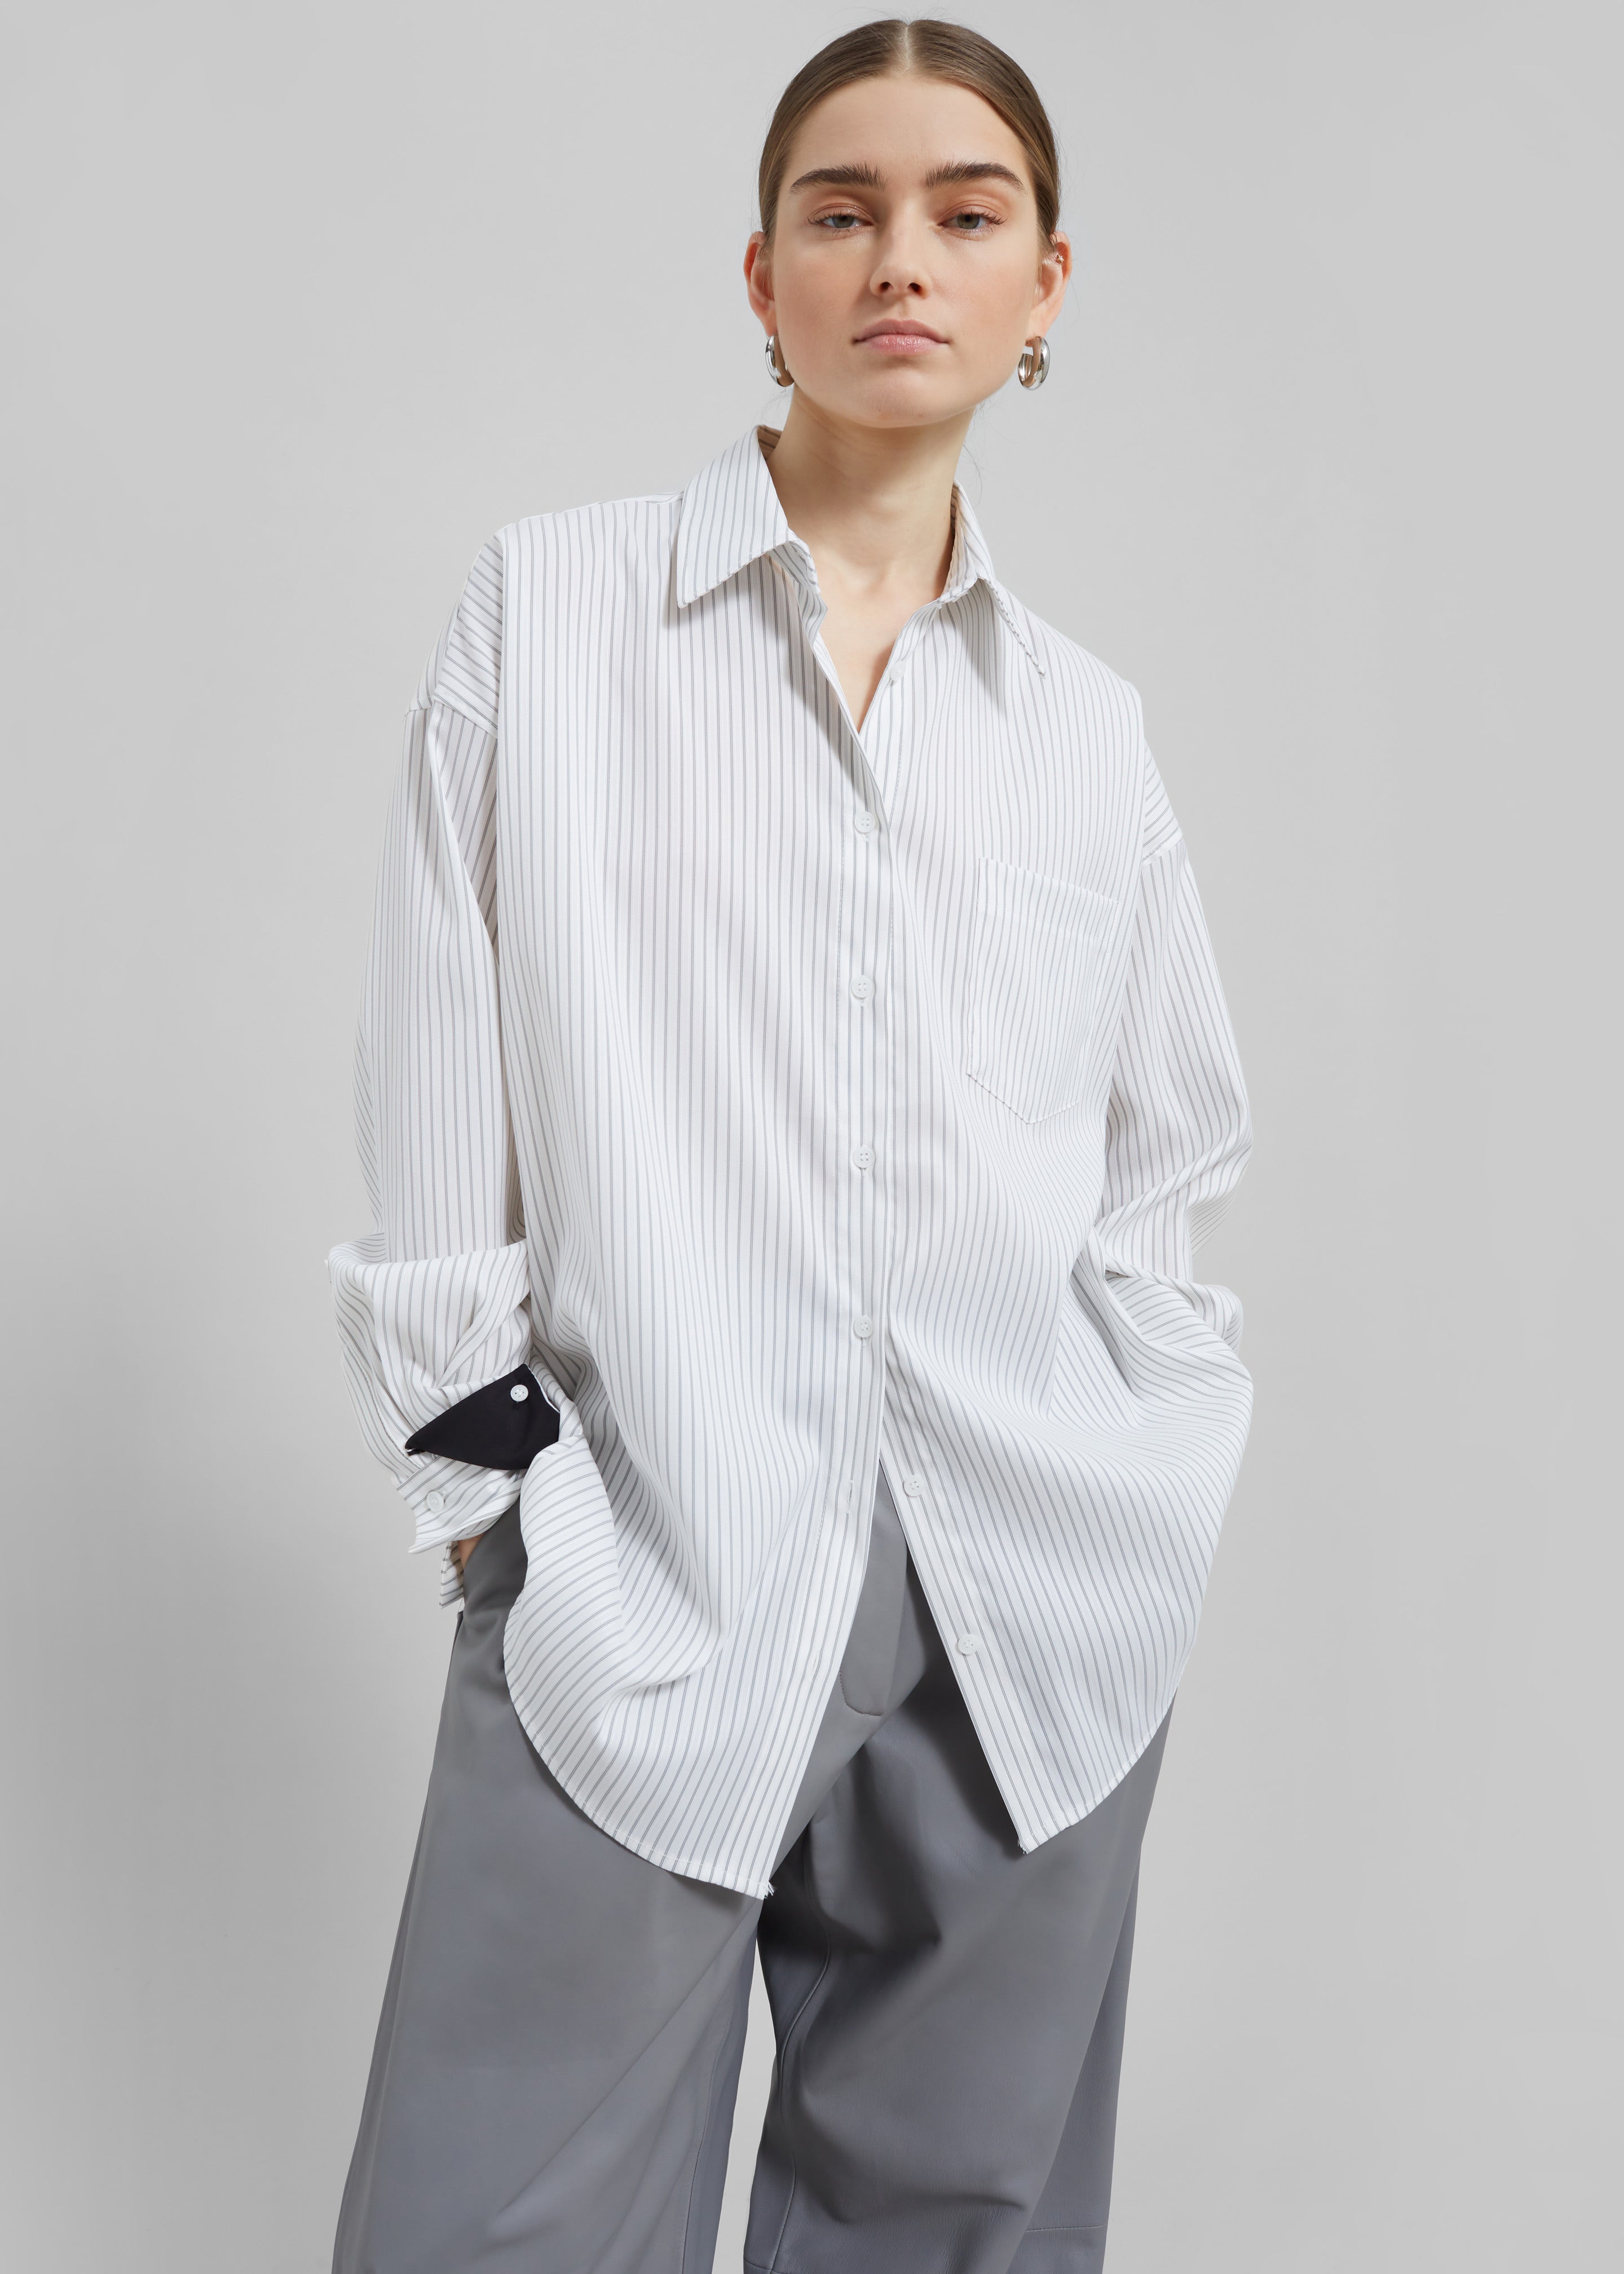 Leona Button Up Shirt - White/Grey Stripe - 3